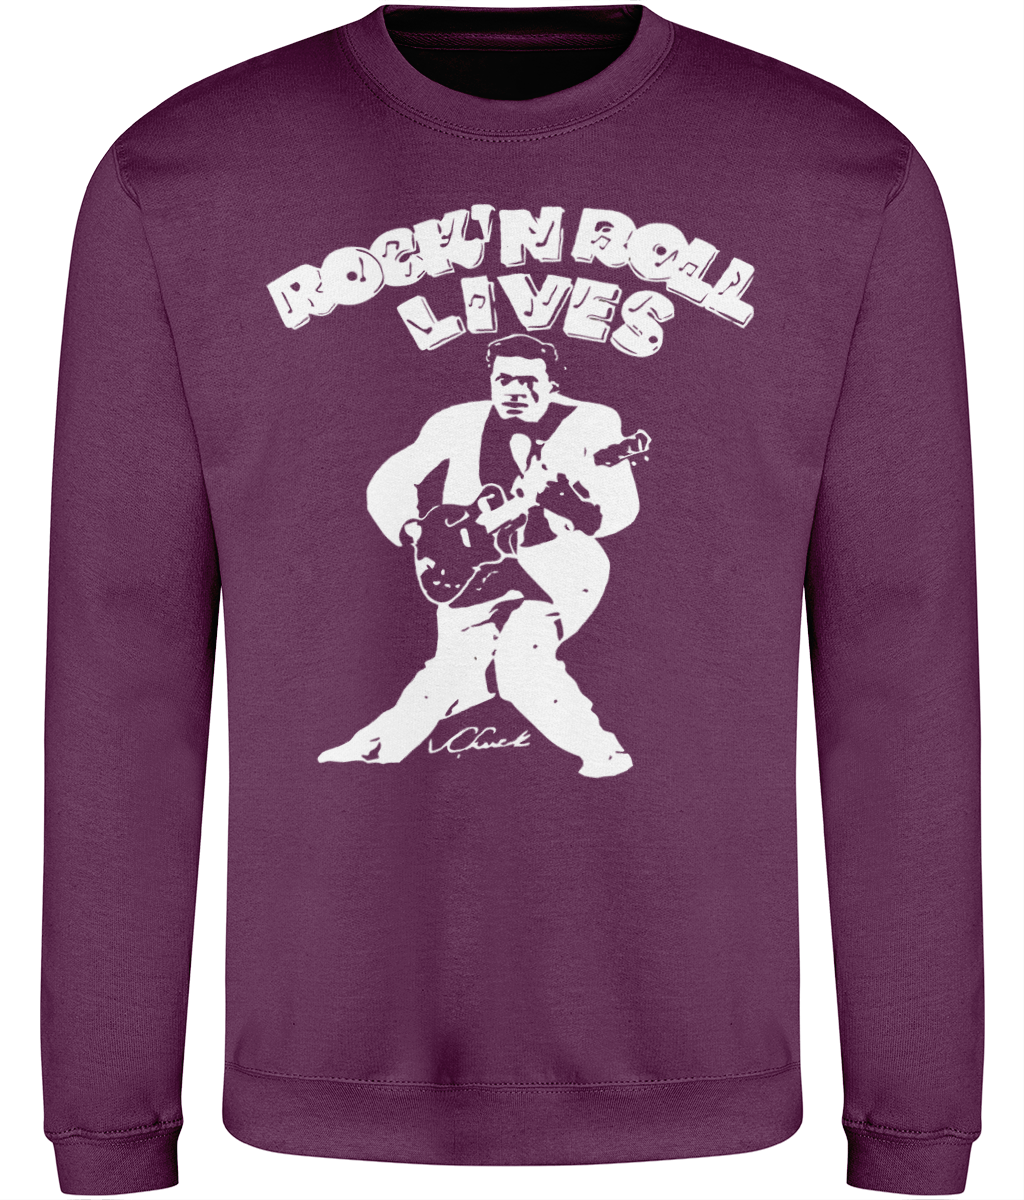 Chuck Berry-Sweatshirt-1972 Wembley Rock n Roll festival-GAS T Shirts